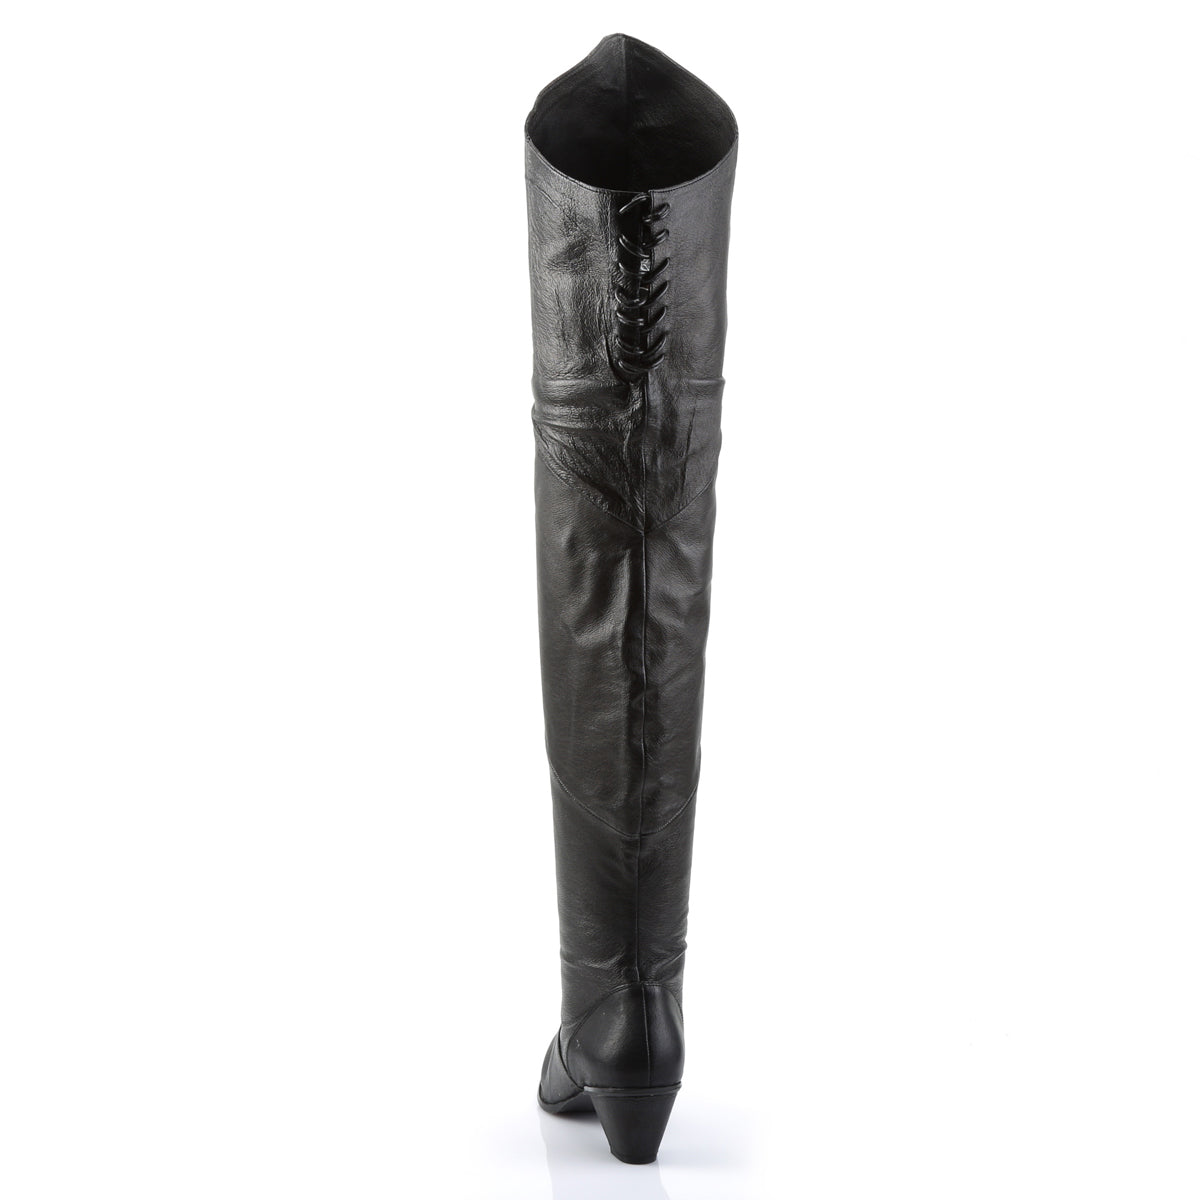 MAIDEN-8828 Fancy Dress Costume Funtasma Women's Boots Black Leather (P)